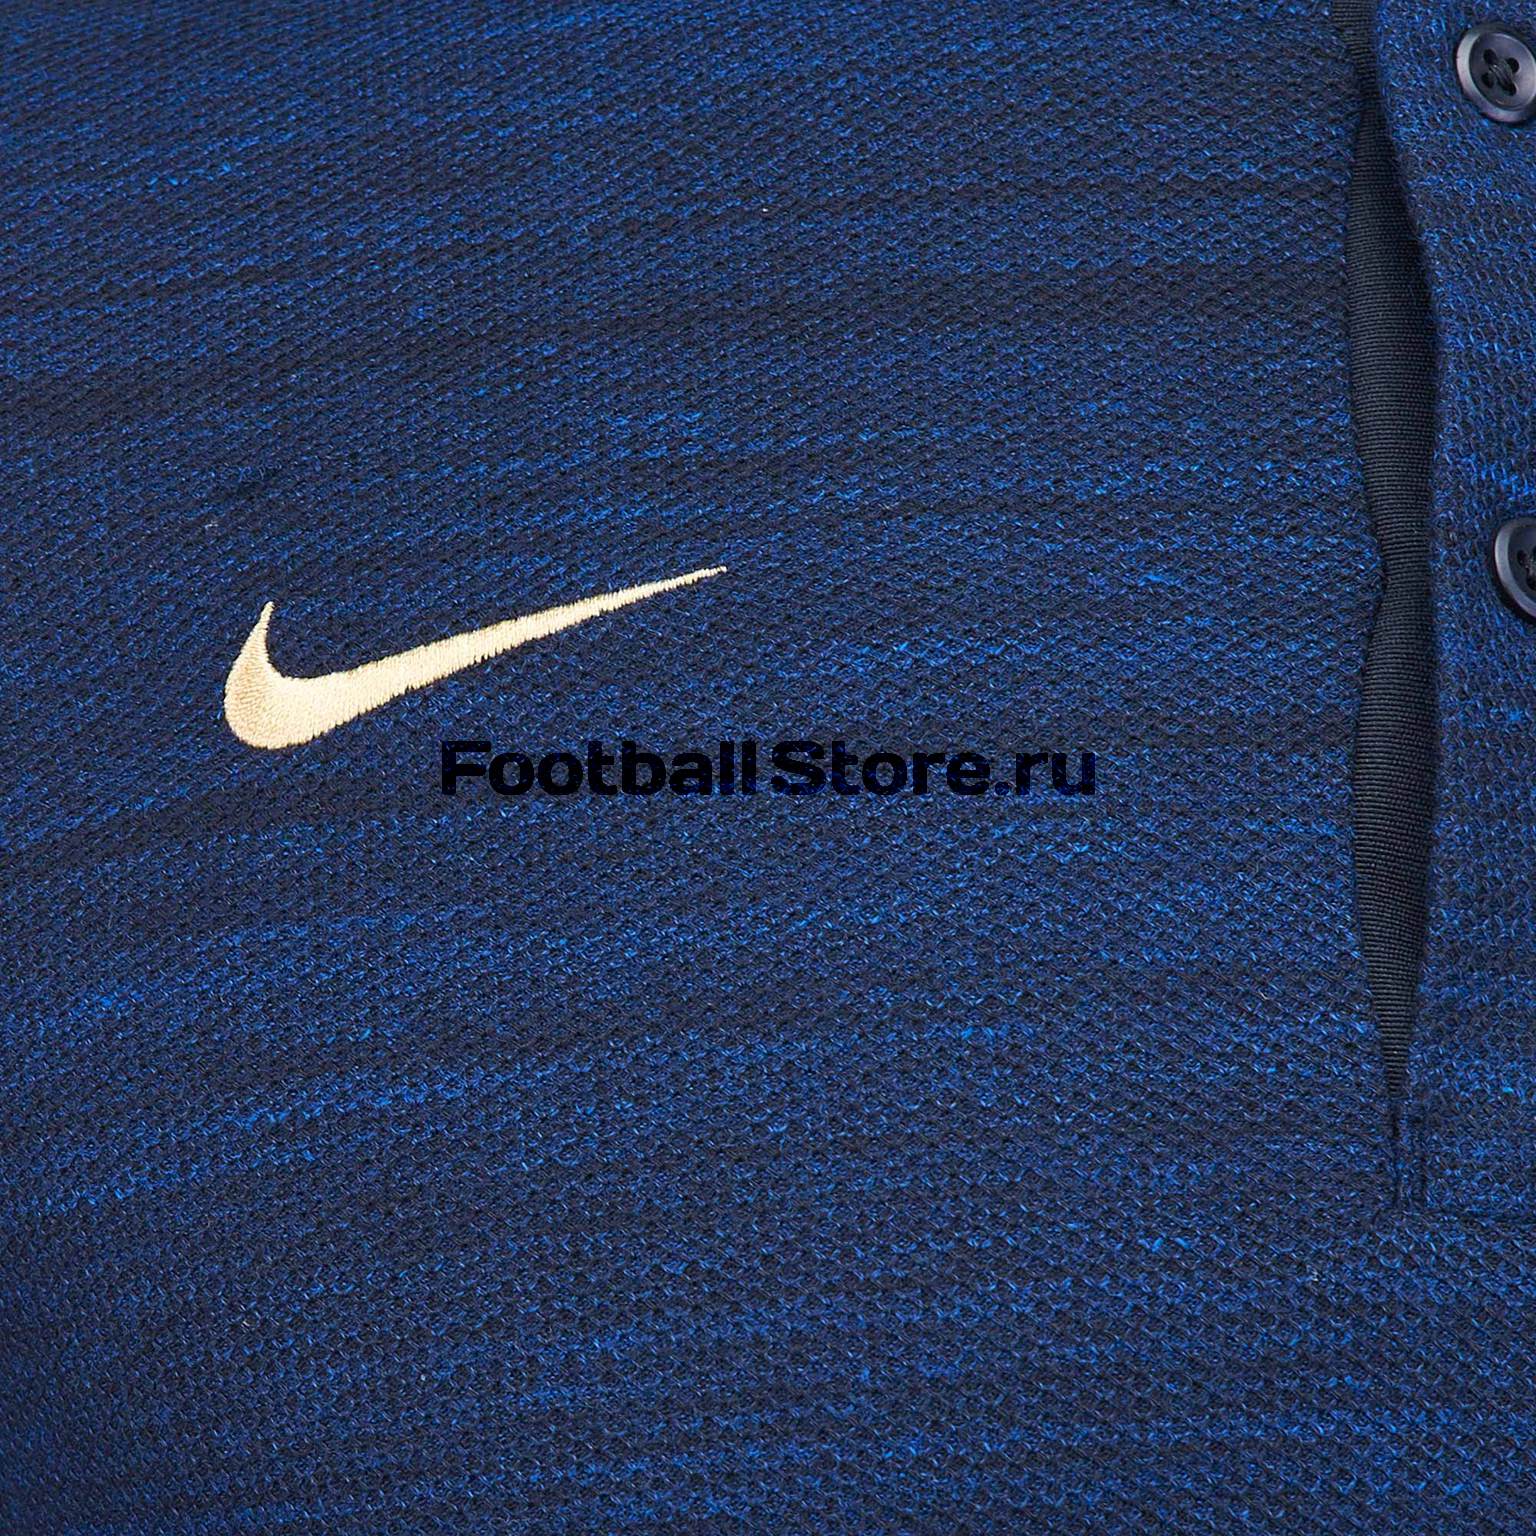 Поло Nike Inter 2018/19